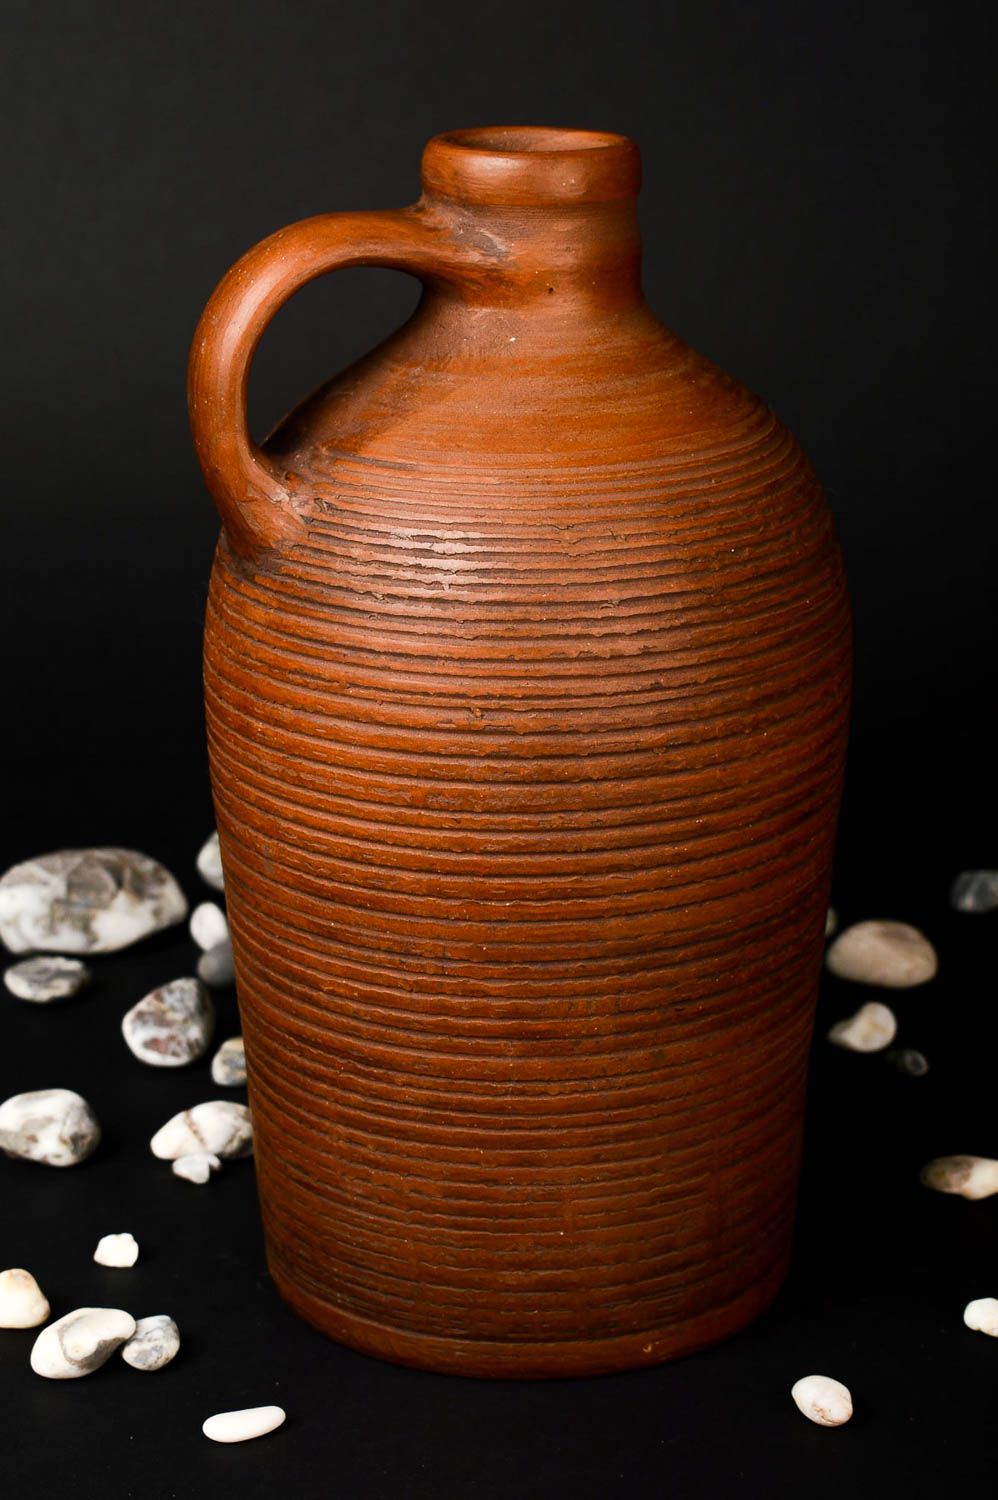 80 oz old-style ceramic 11 wine bottle wine carafe with handle 3 lb photo 1